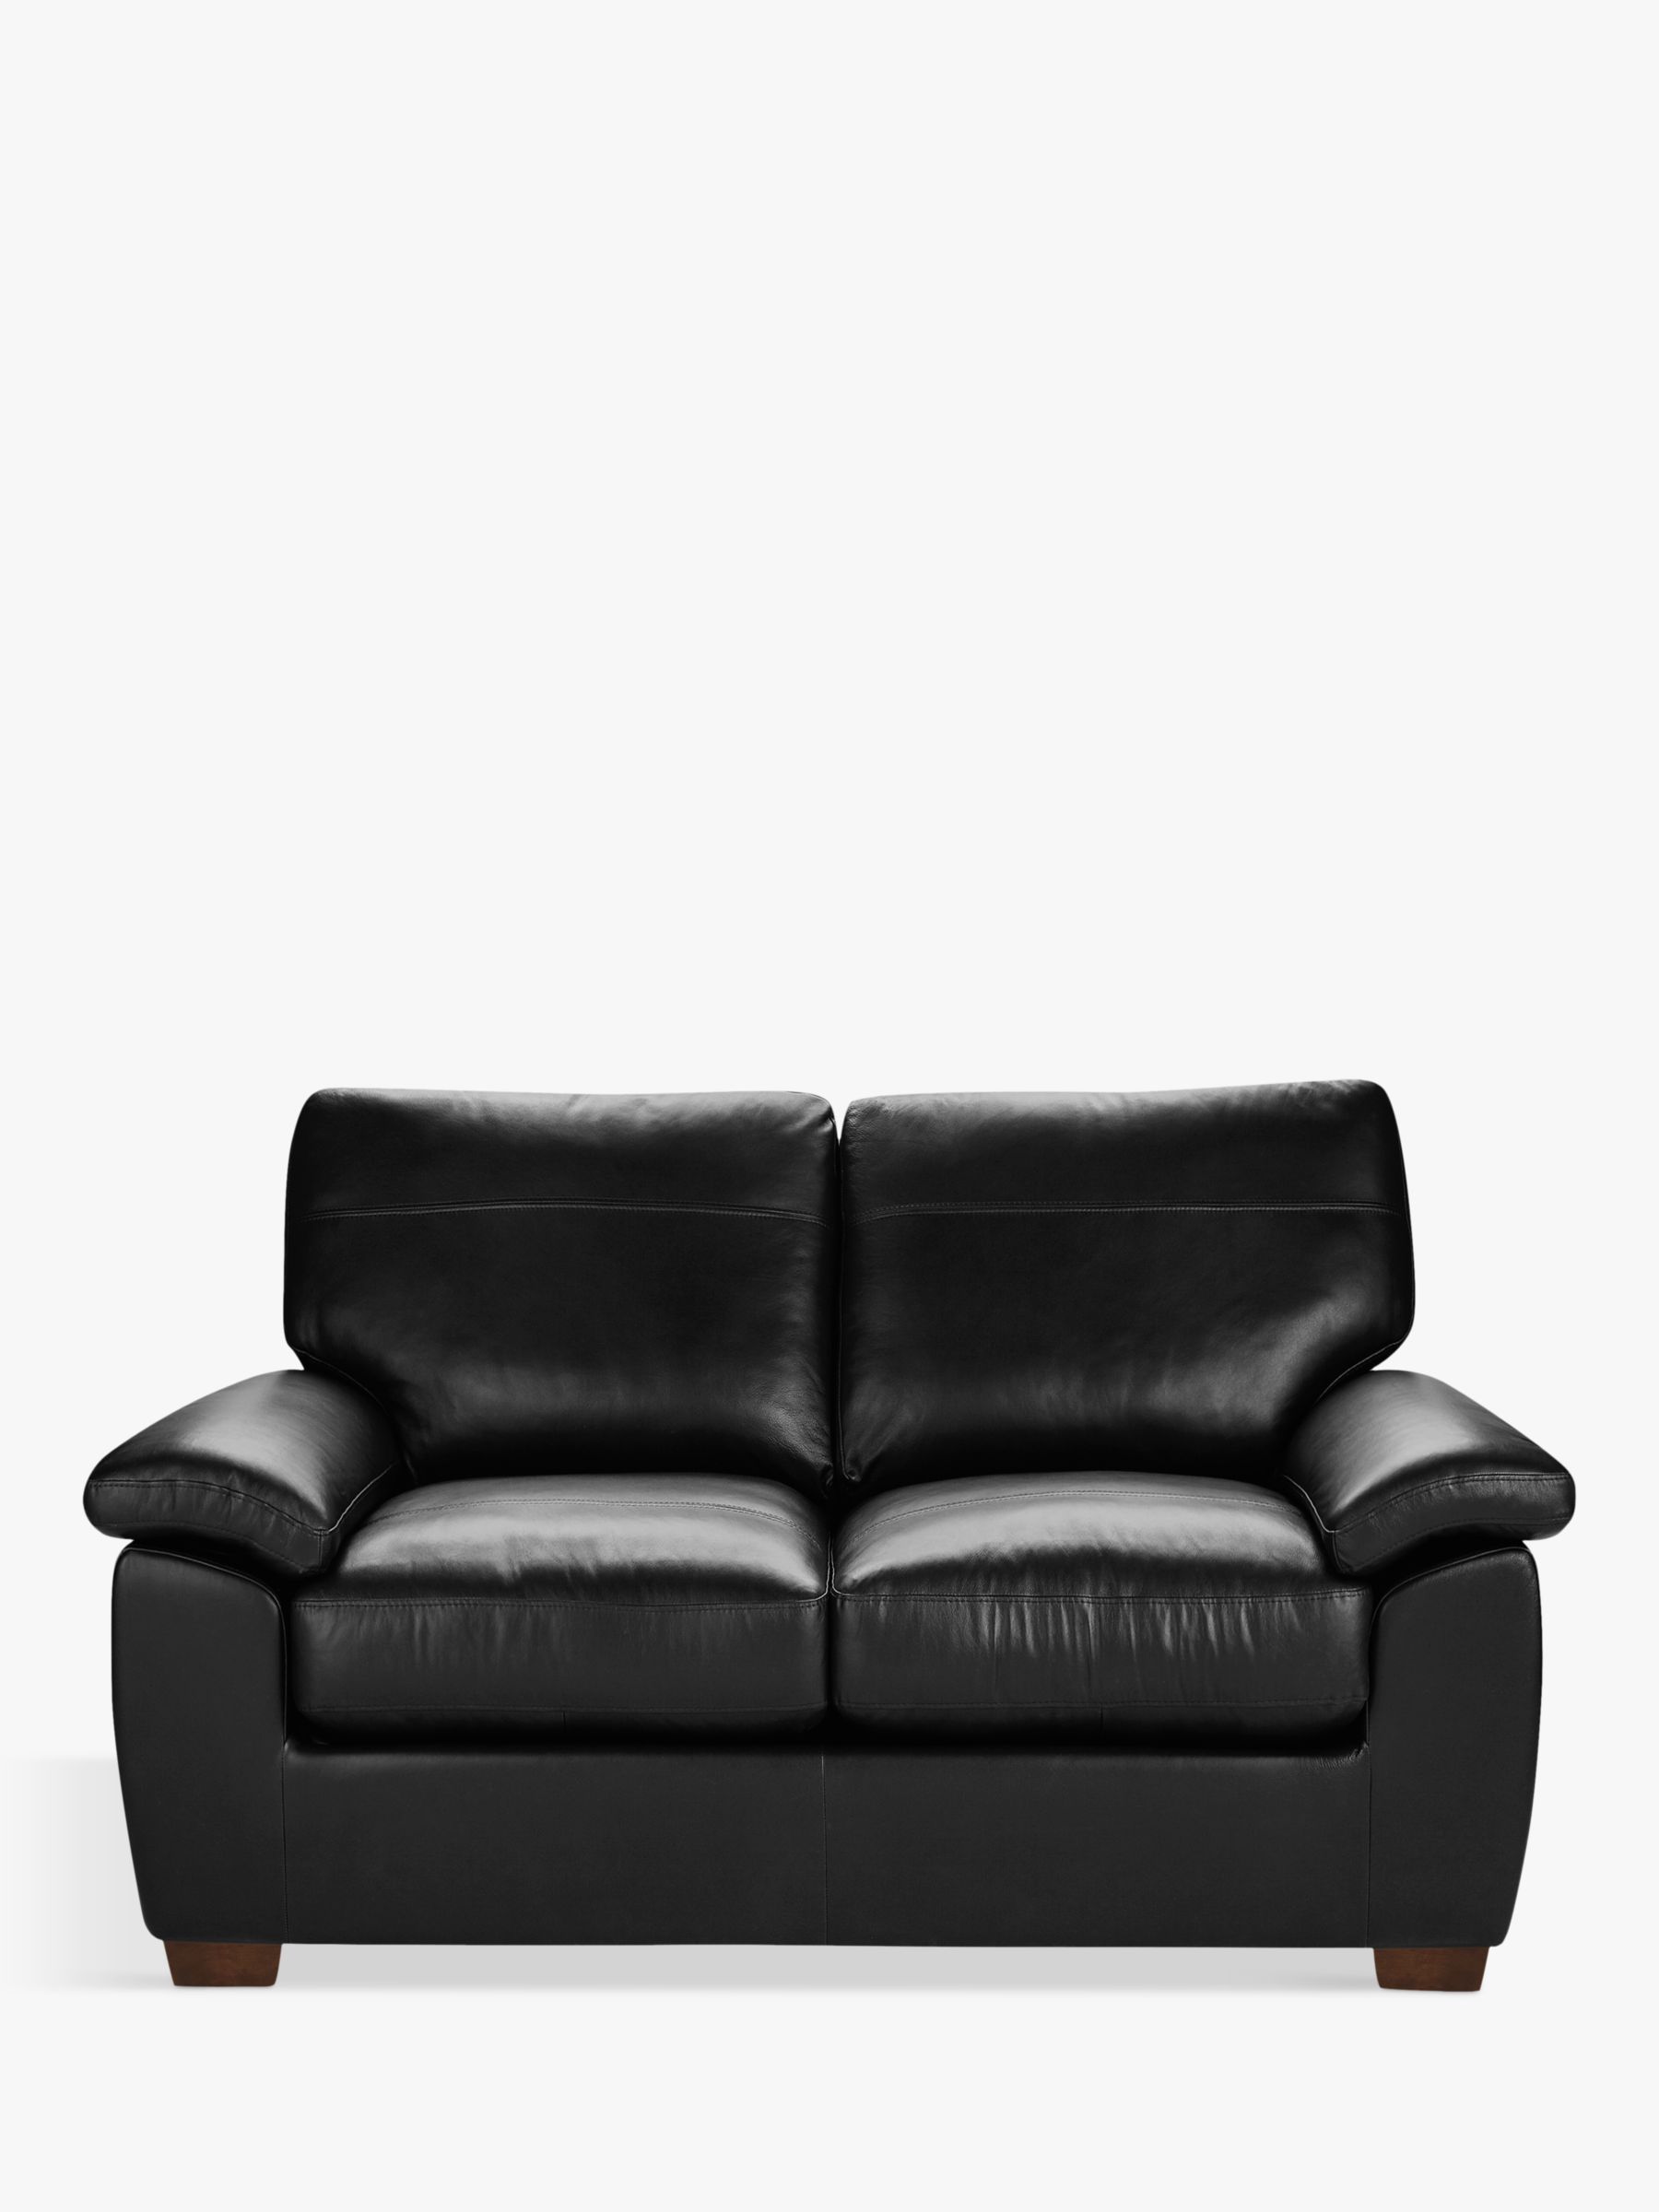 Camden Range, John Lewis Camden Small 2 Seater Leather Sofa, Dark Leg, Comtempo Black